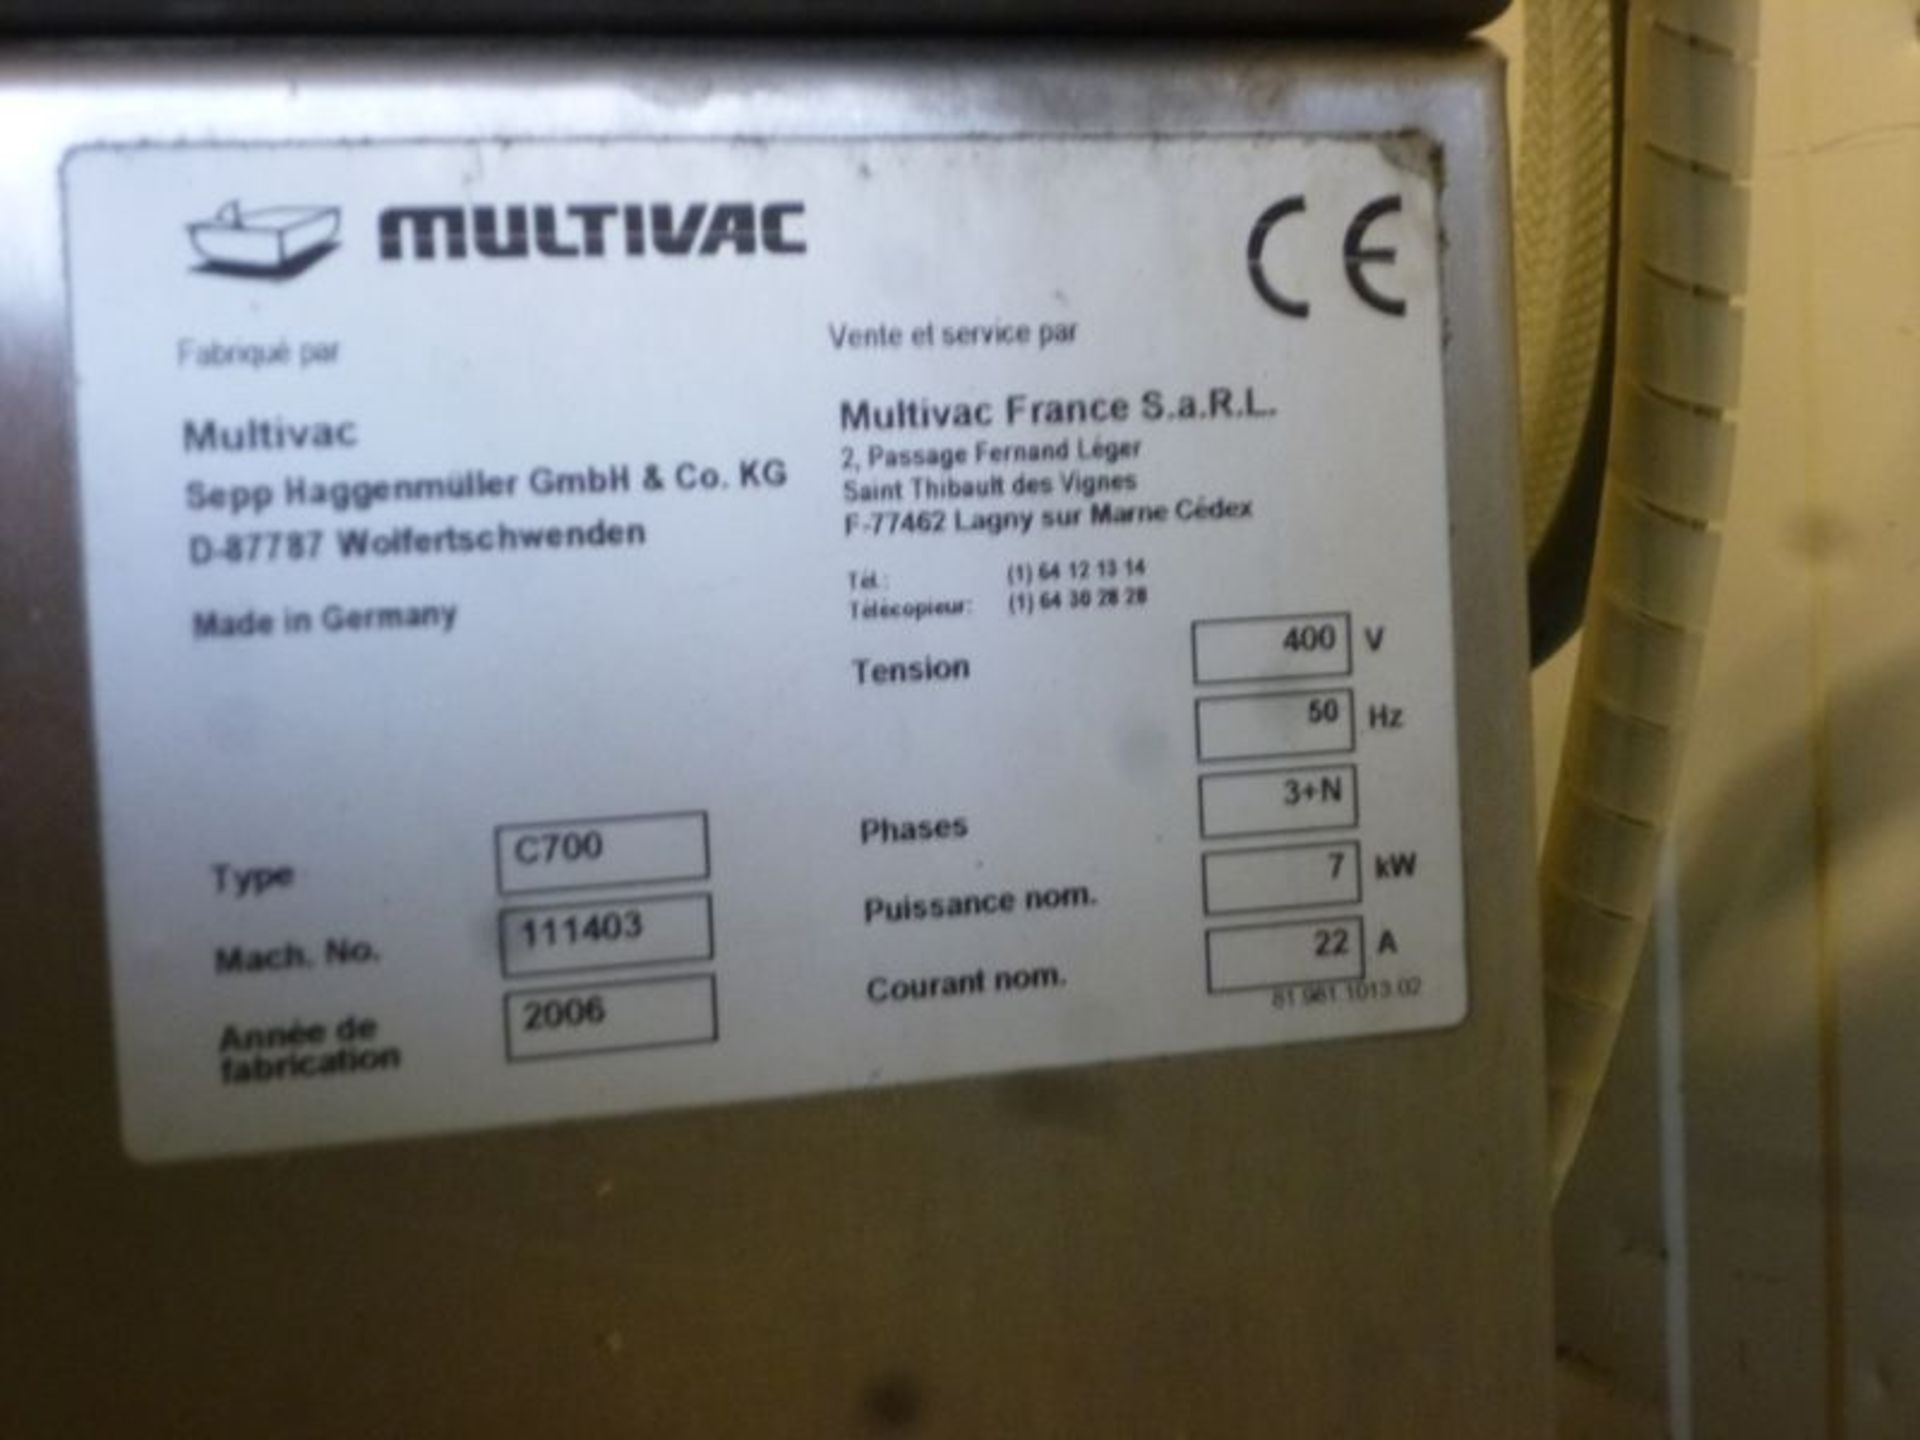 Vacuum bell welder – Brand MULTIVAC – Type C 700 LOCATION FRANCE - Image 5 of 5